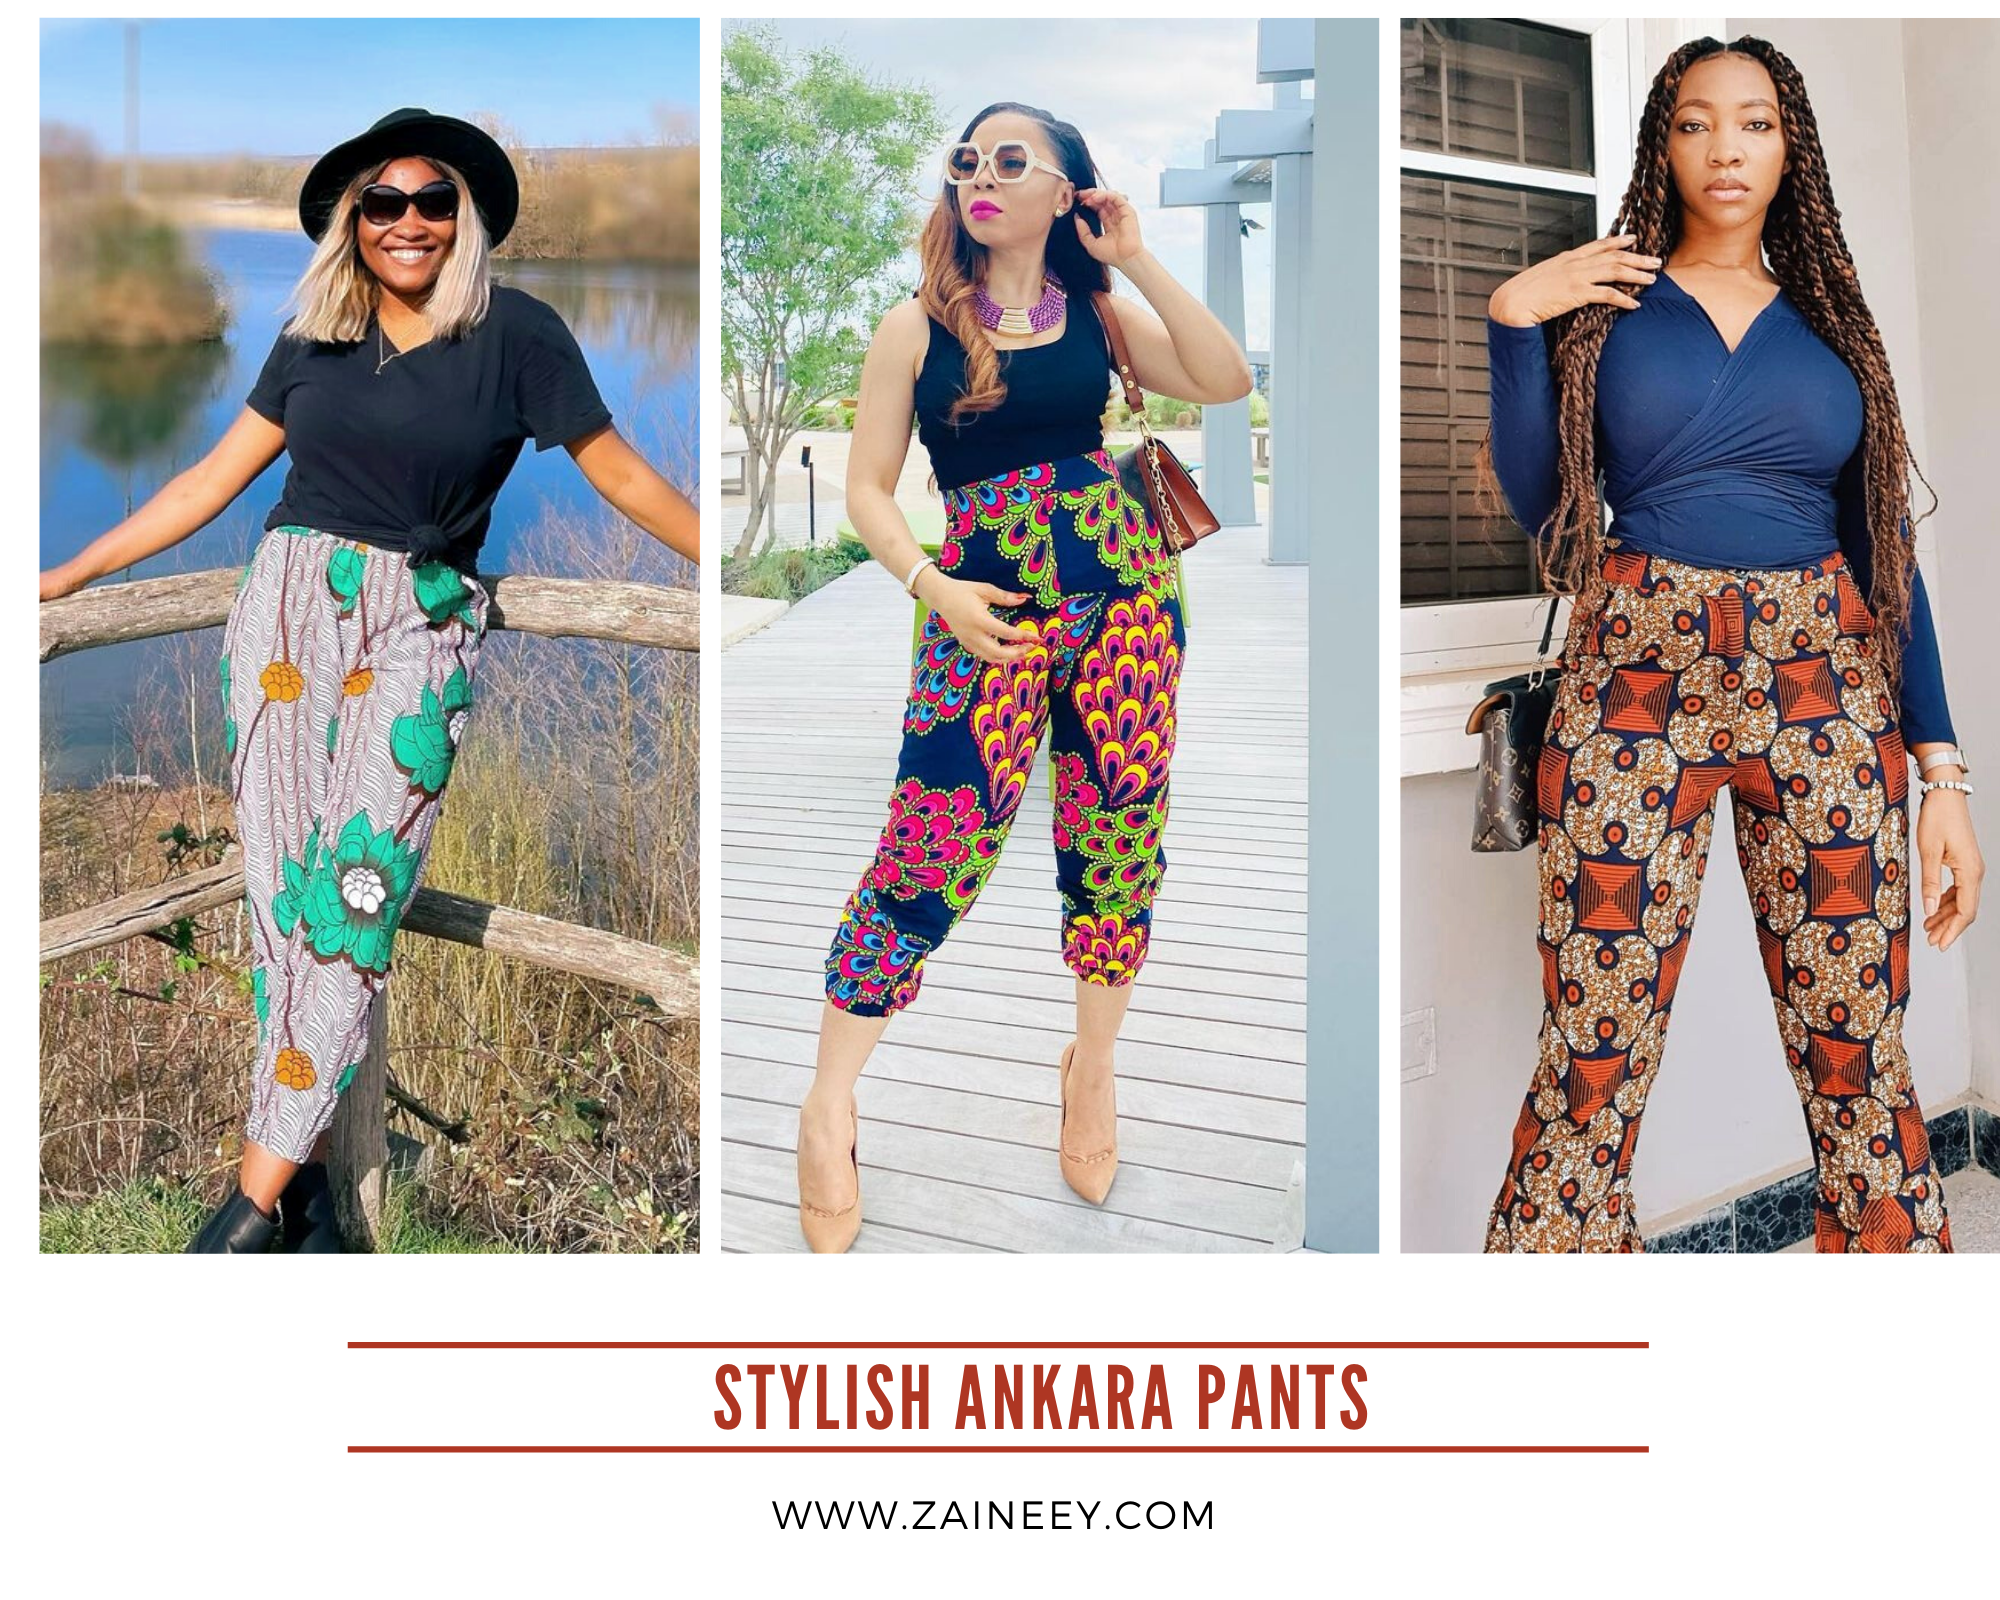 Simple, Cute, and Stylish Ankara Pants for fashionistas 2021